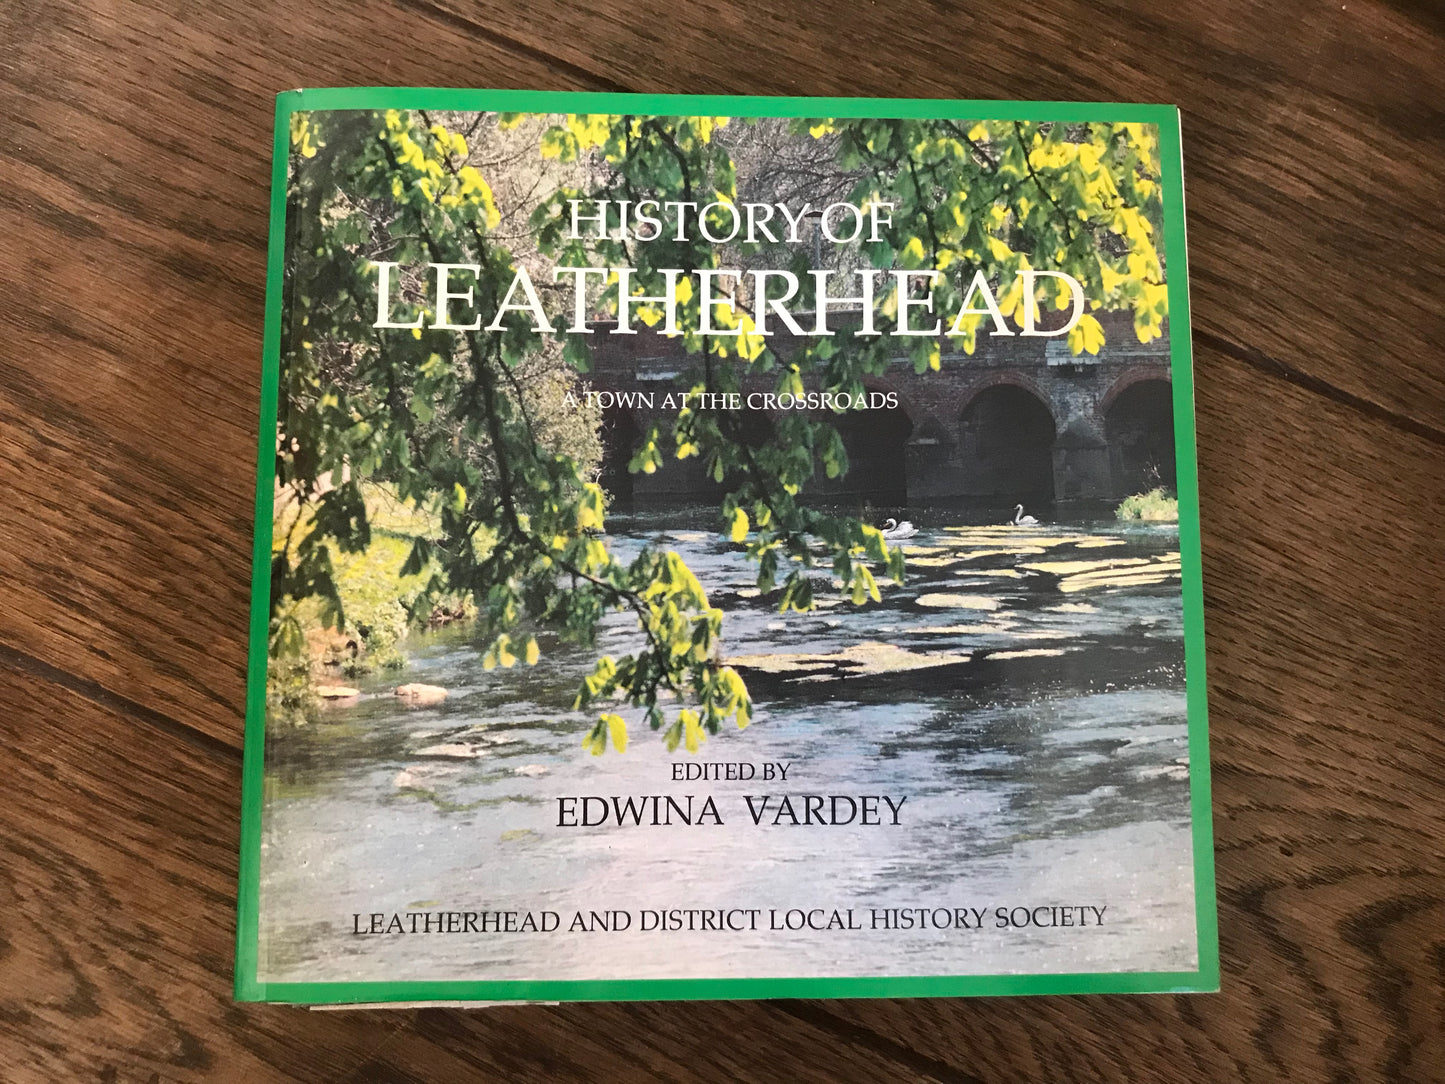 History of Leatherhead - edited by Edwina Vardey